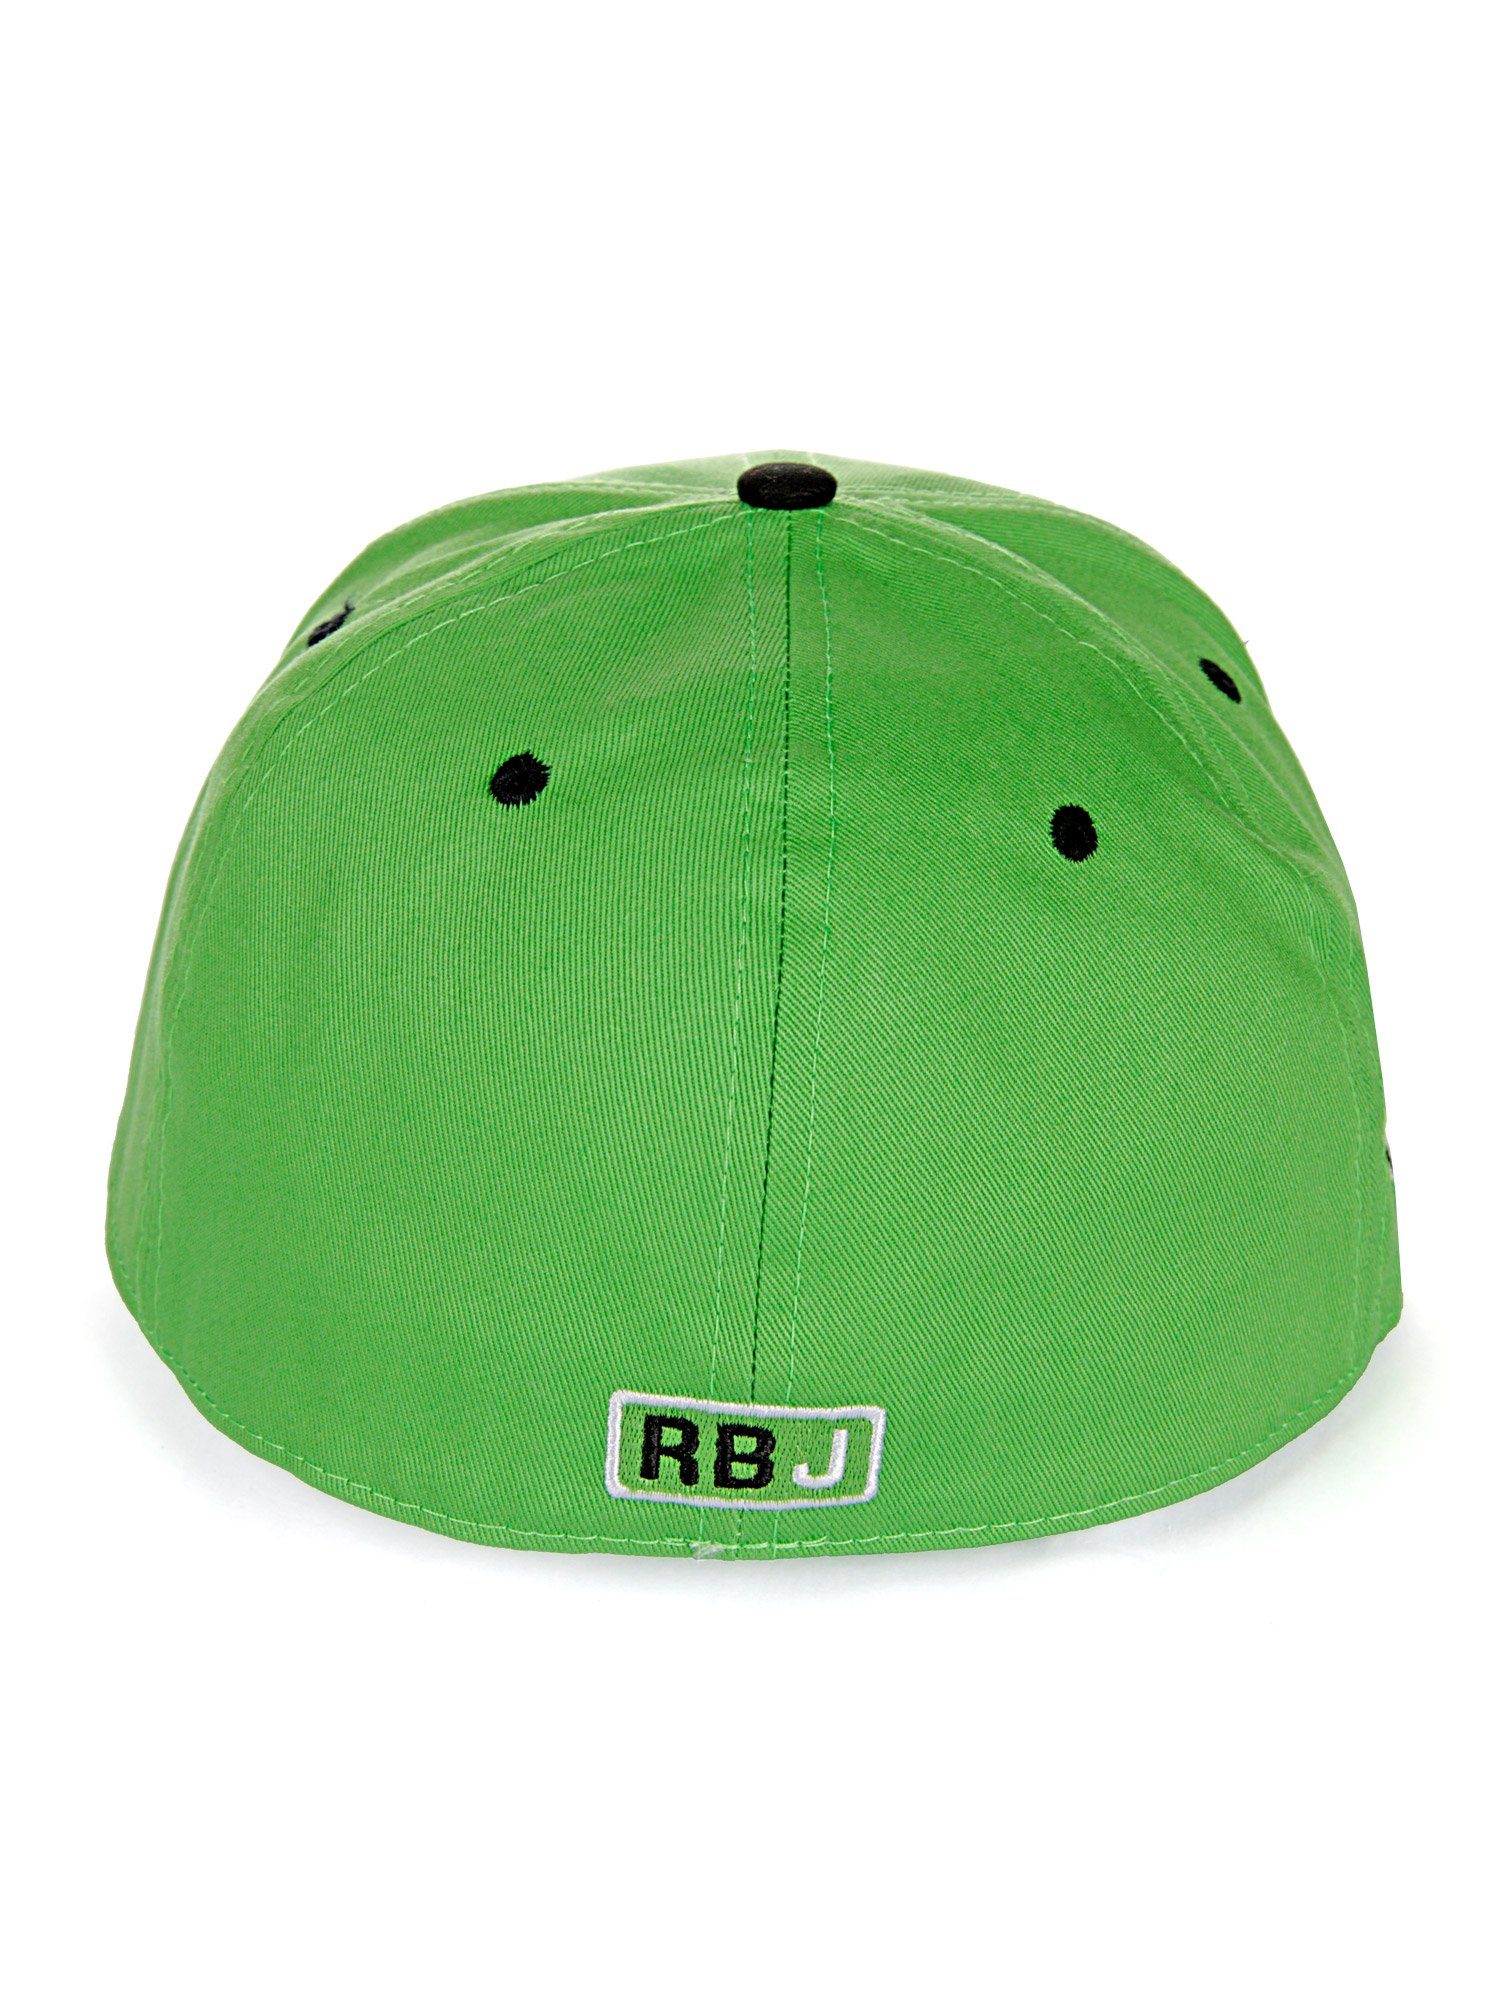 Durham Baseball grün-schwarz Schirm Cap kontrastfarbigem mit RedBridge